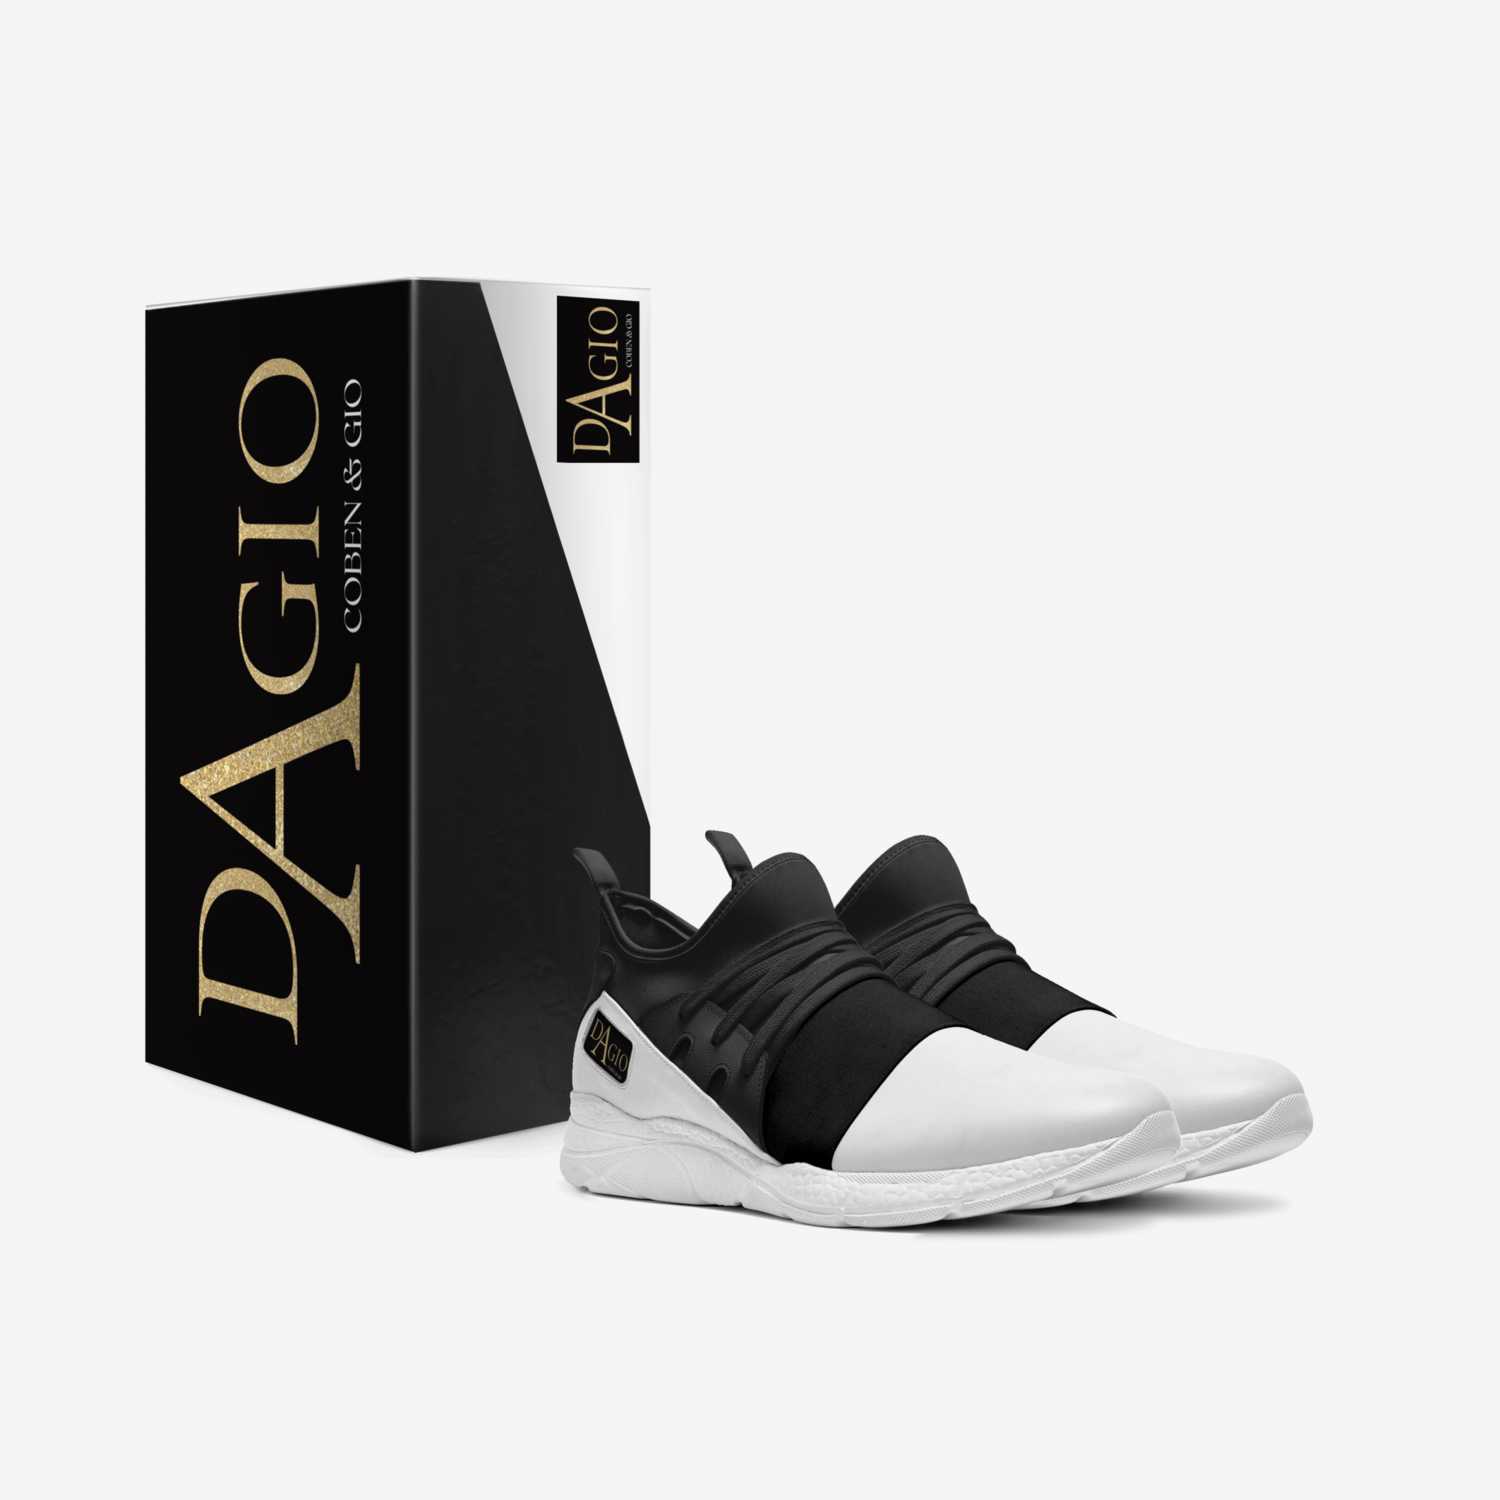 DA GIO custom made in Italy shoes by Costa Cobenpolo | Box view